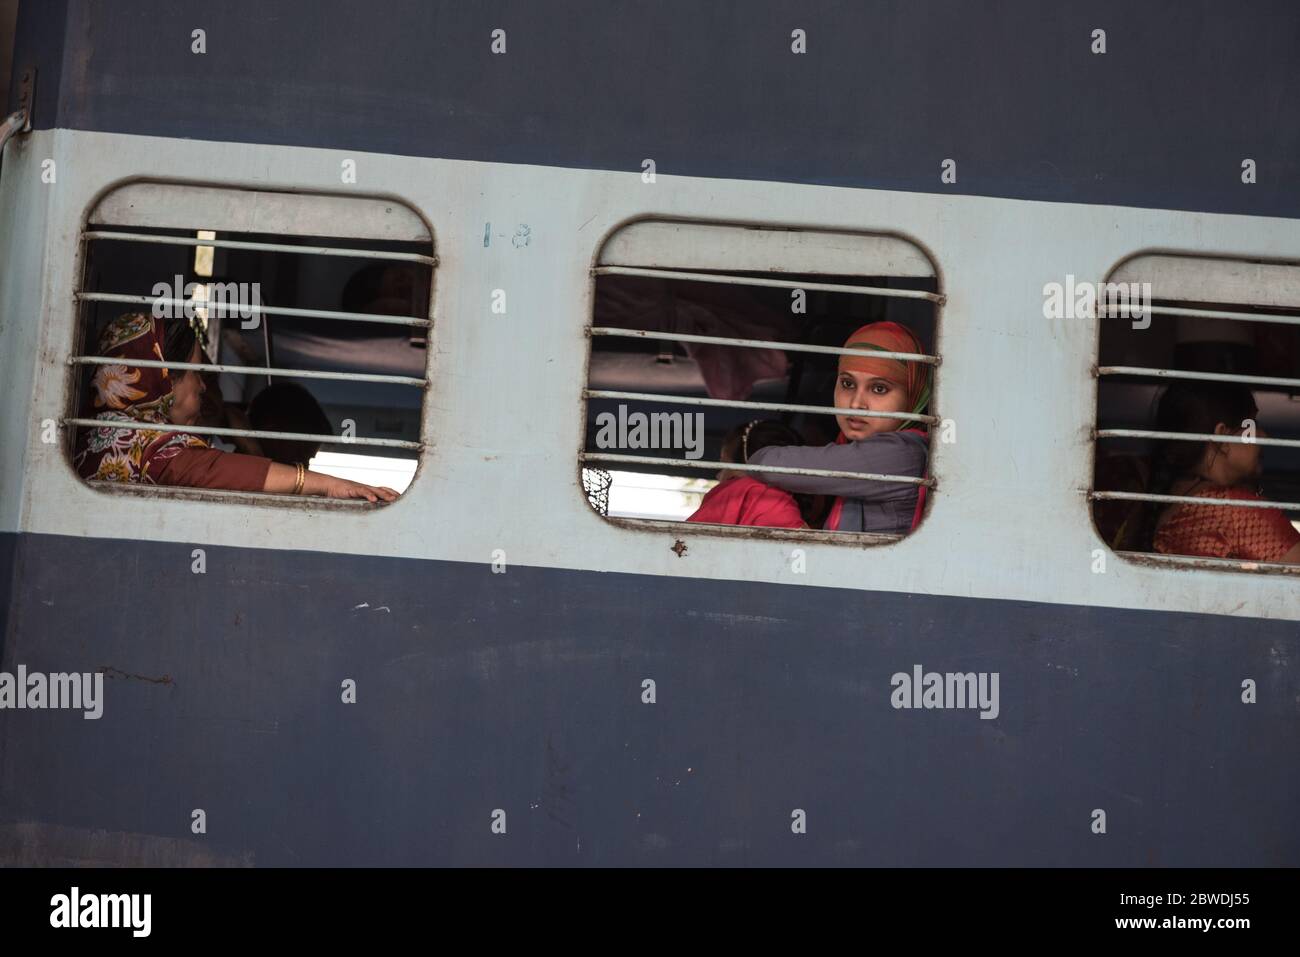 Second Class Train. Indian Railways. Rail Travel. India. Stock Photo